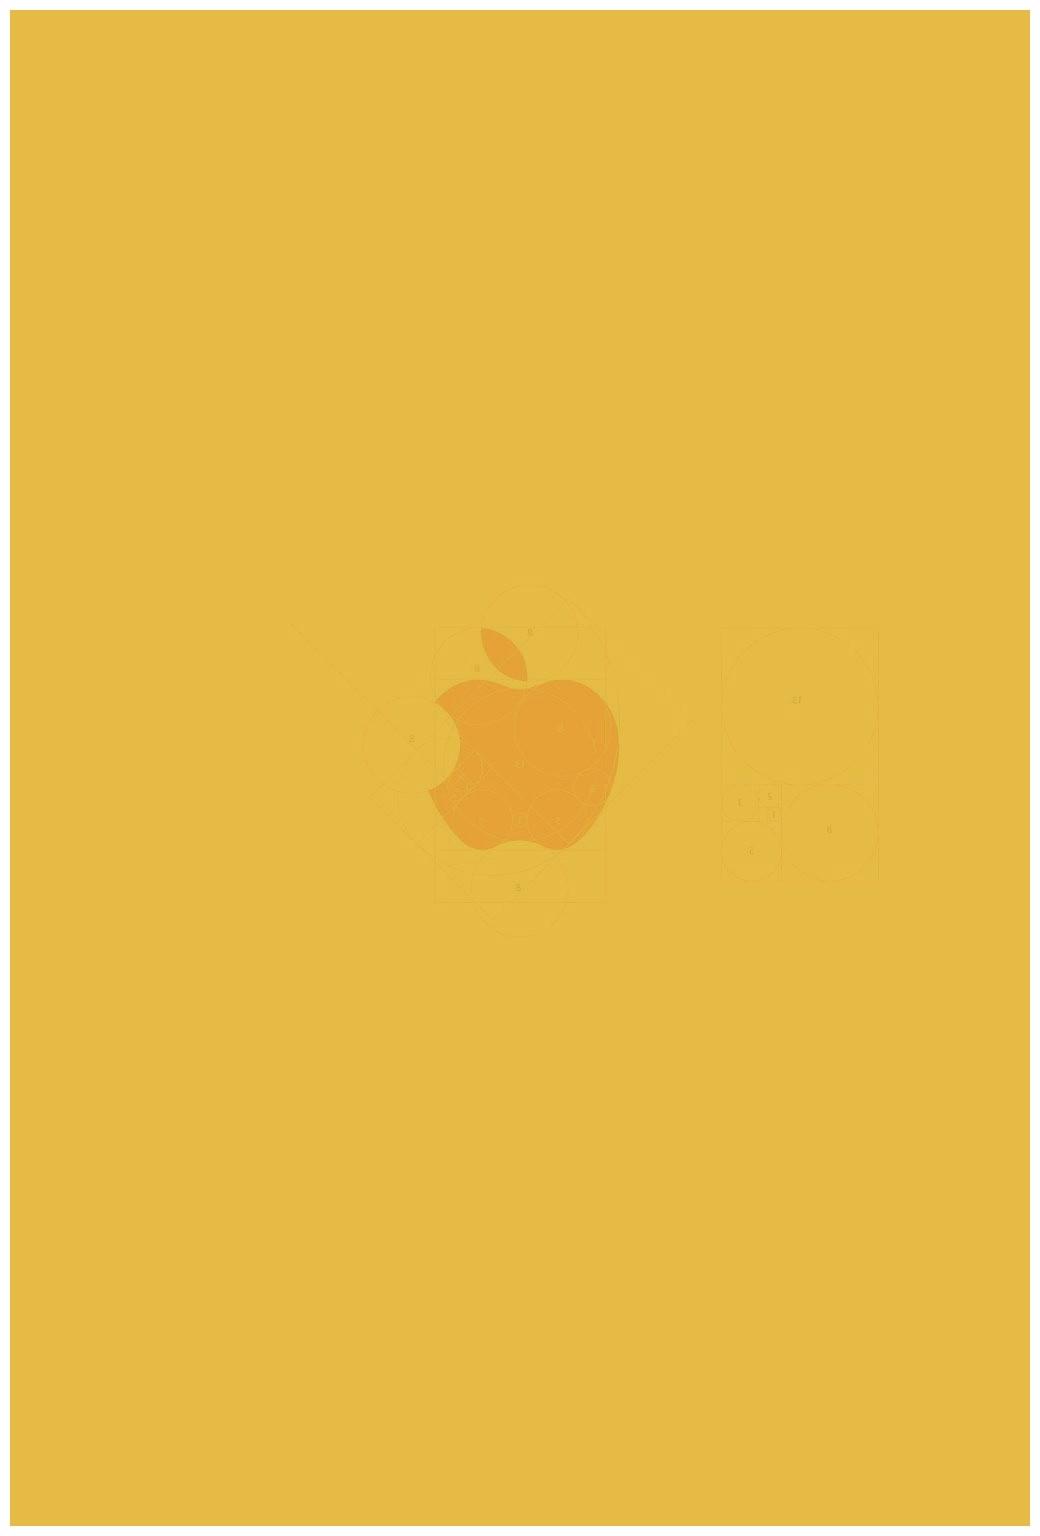 Pastel Yellow iPhone Wallpaper Tumblr Wallpaper